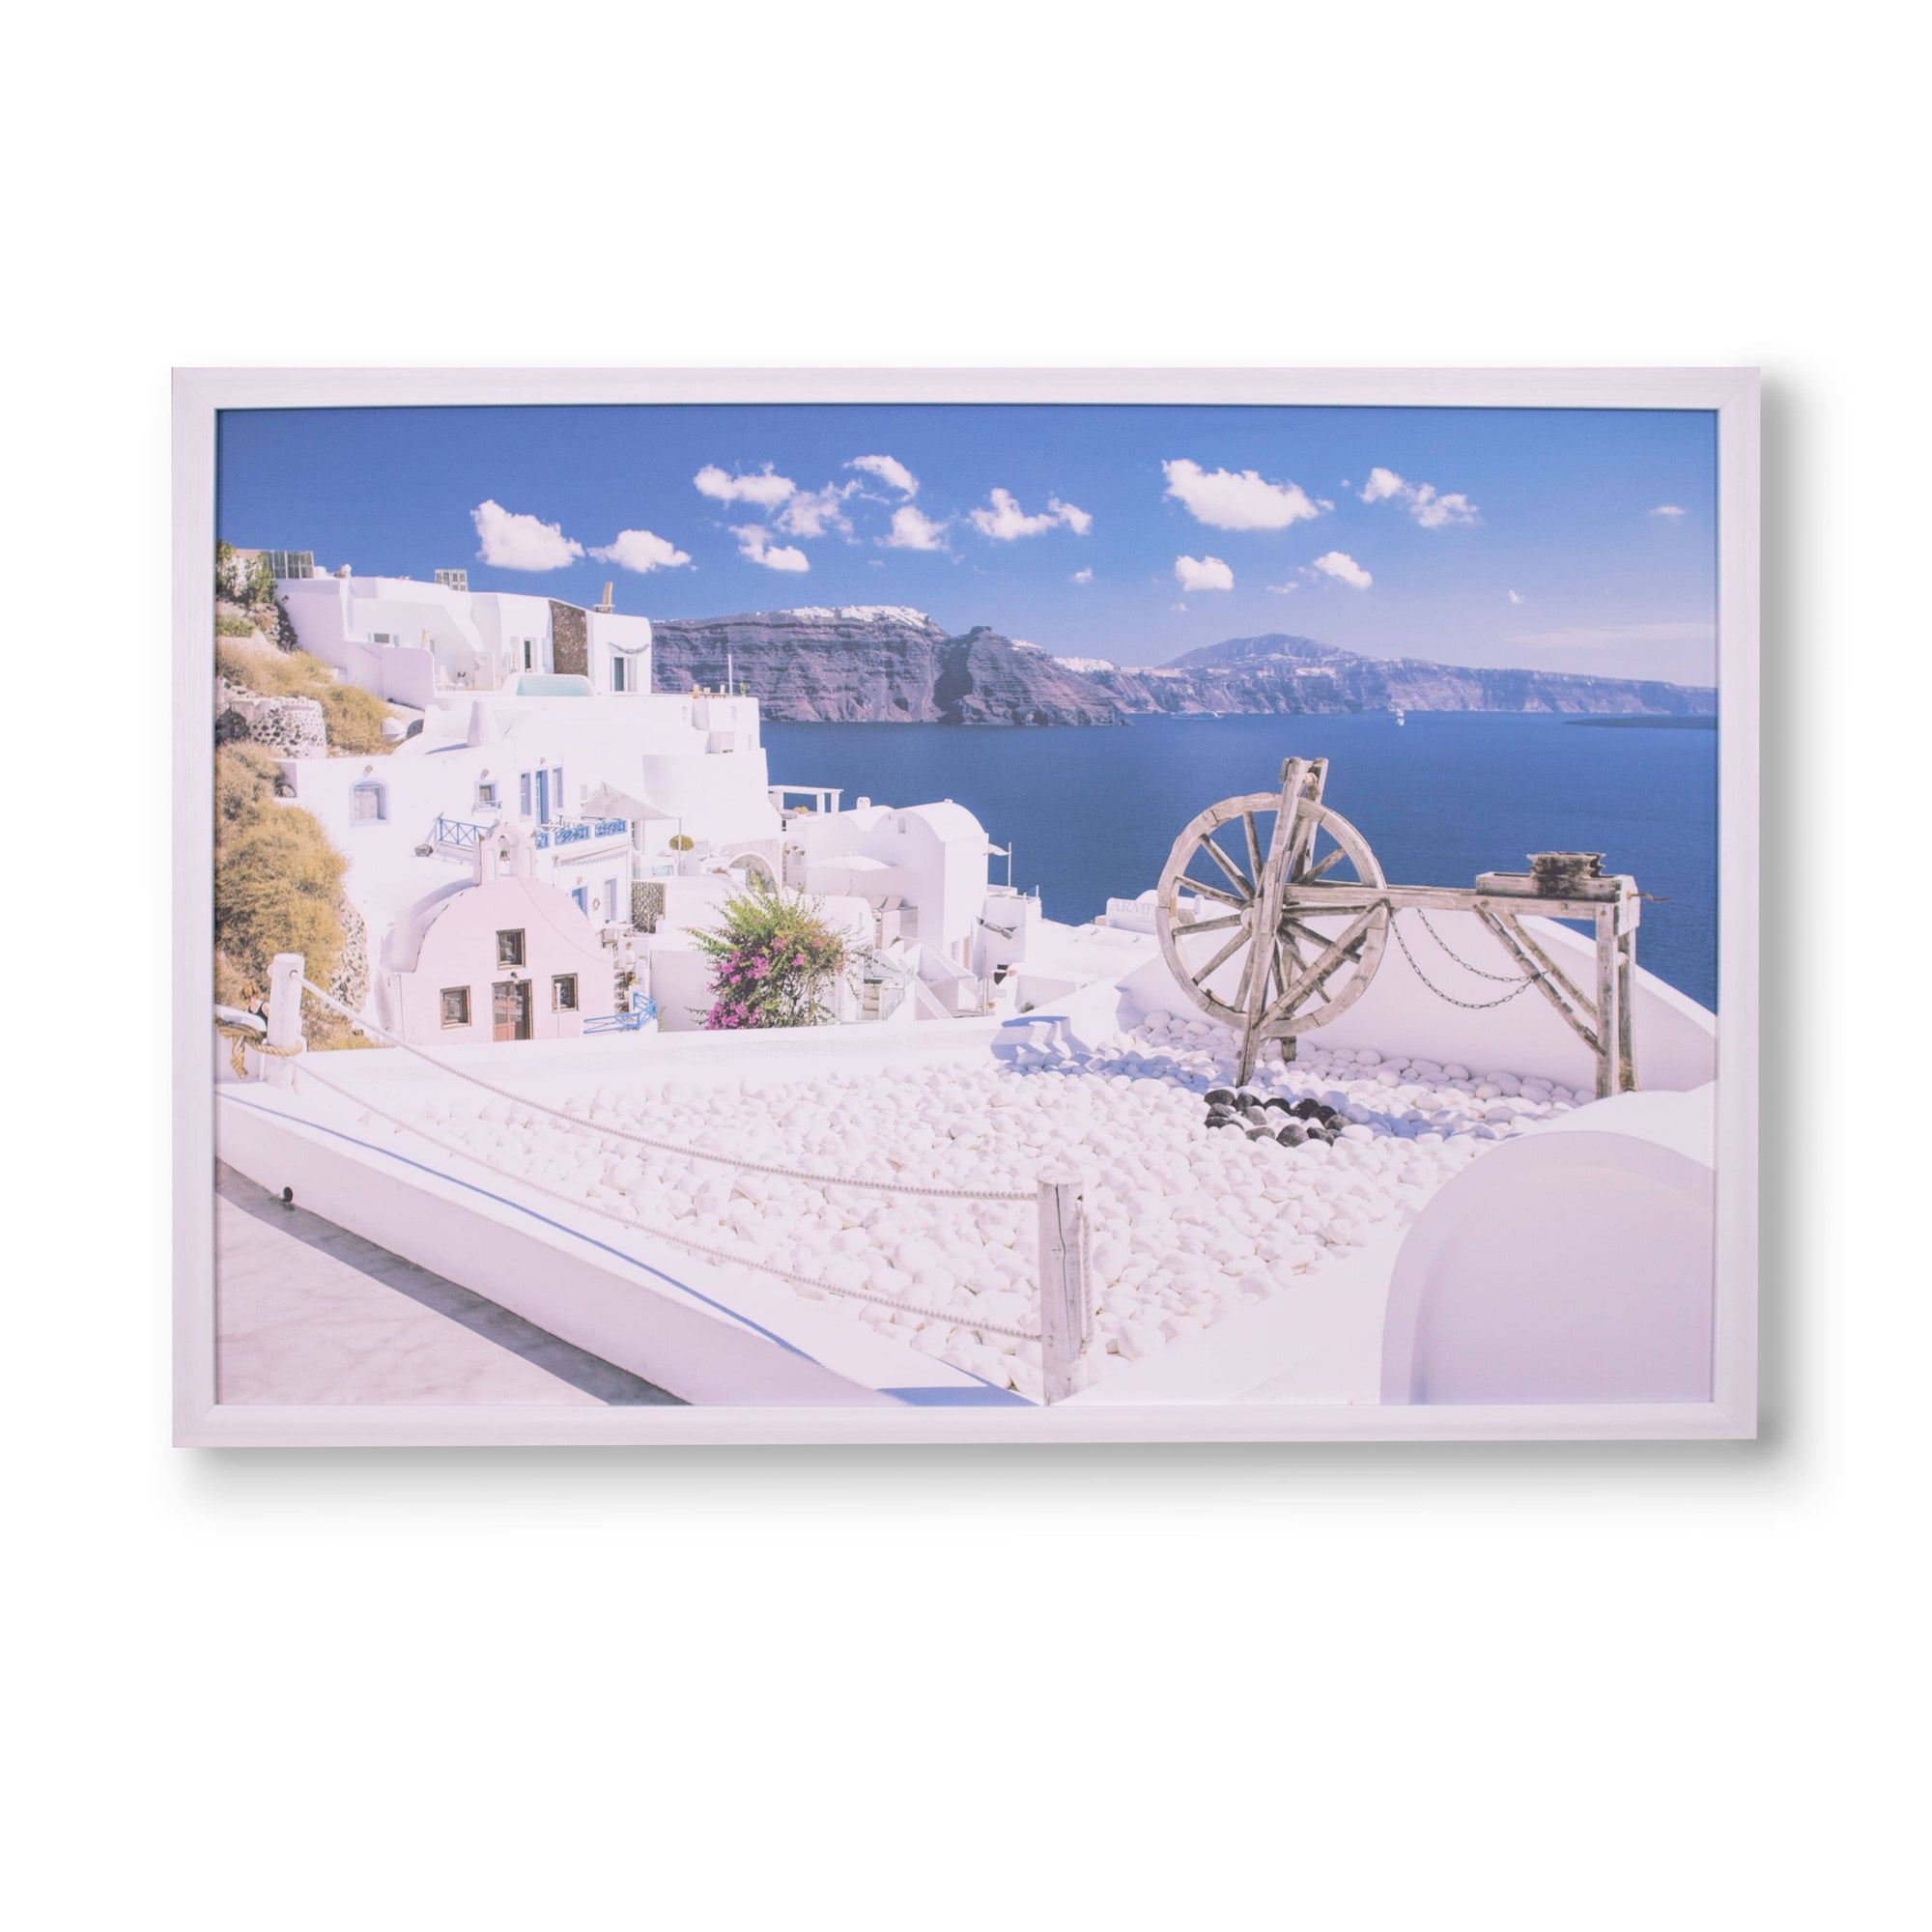 Santorini Island - 1575 x 1075 Painting Leather Gallery White 1575 x 1075 